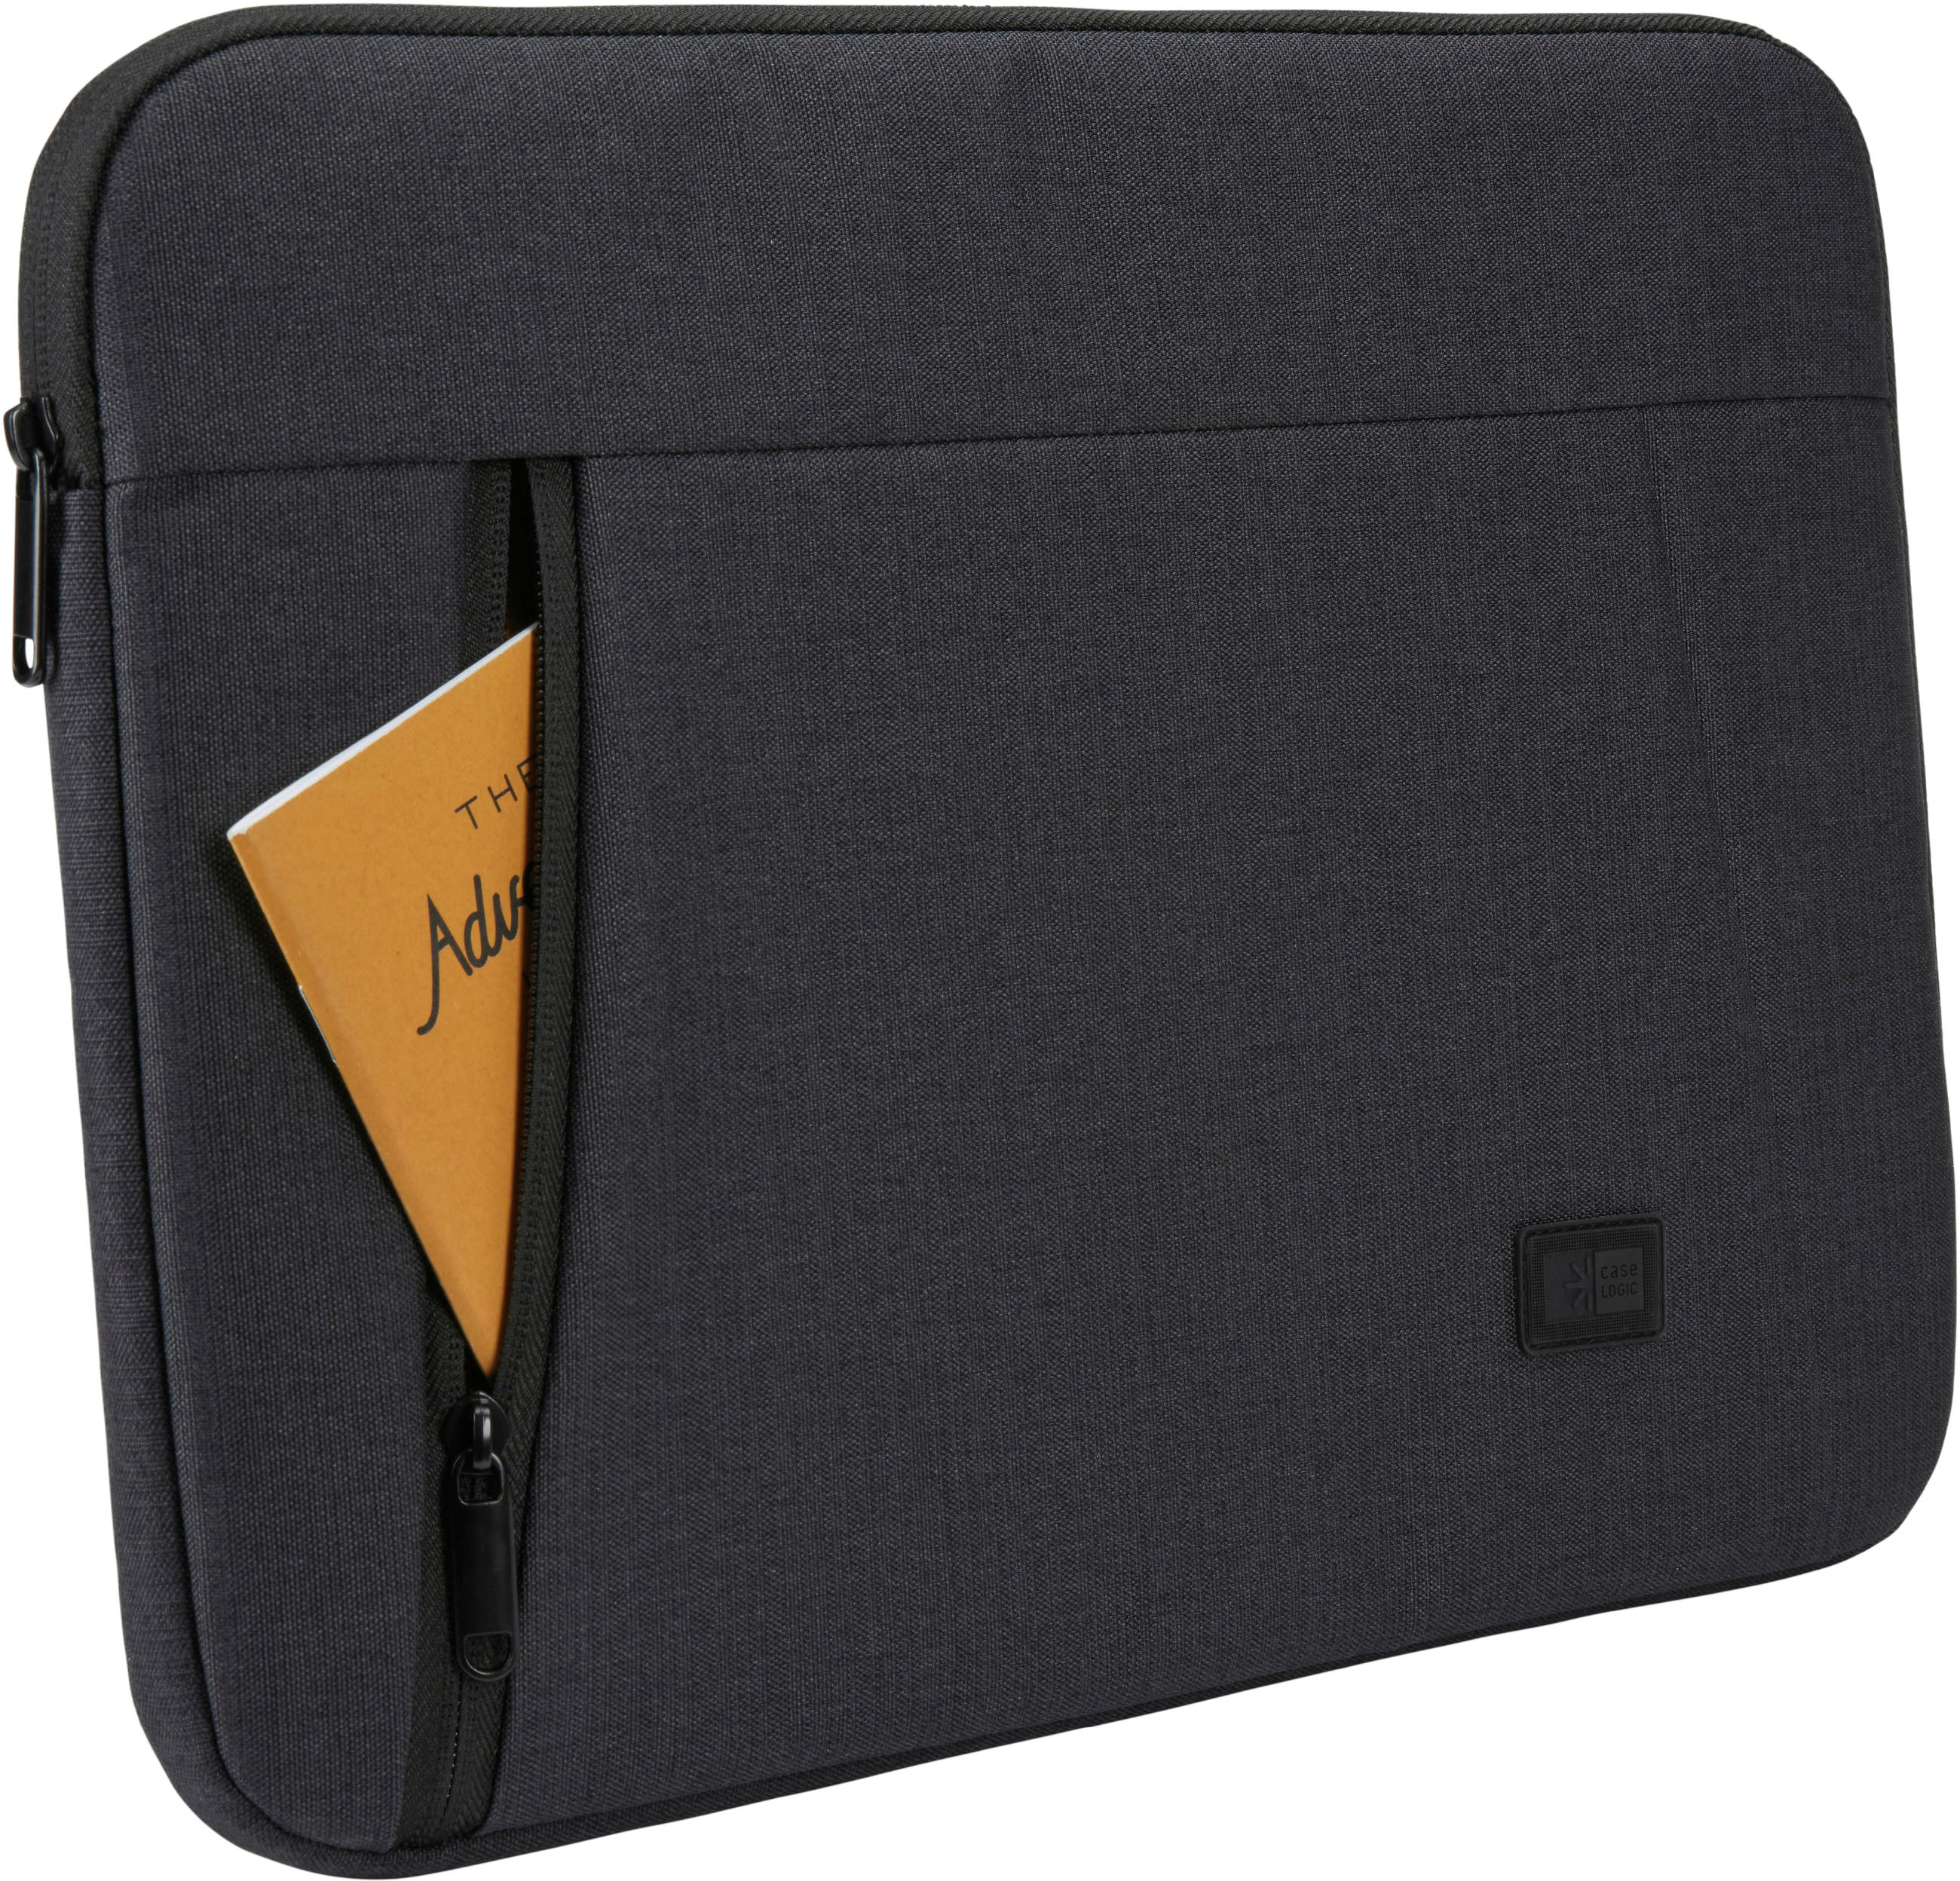 AirCase 14-Inch Designer Laptop Sleeve, 6-MultiUtility Pockets